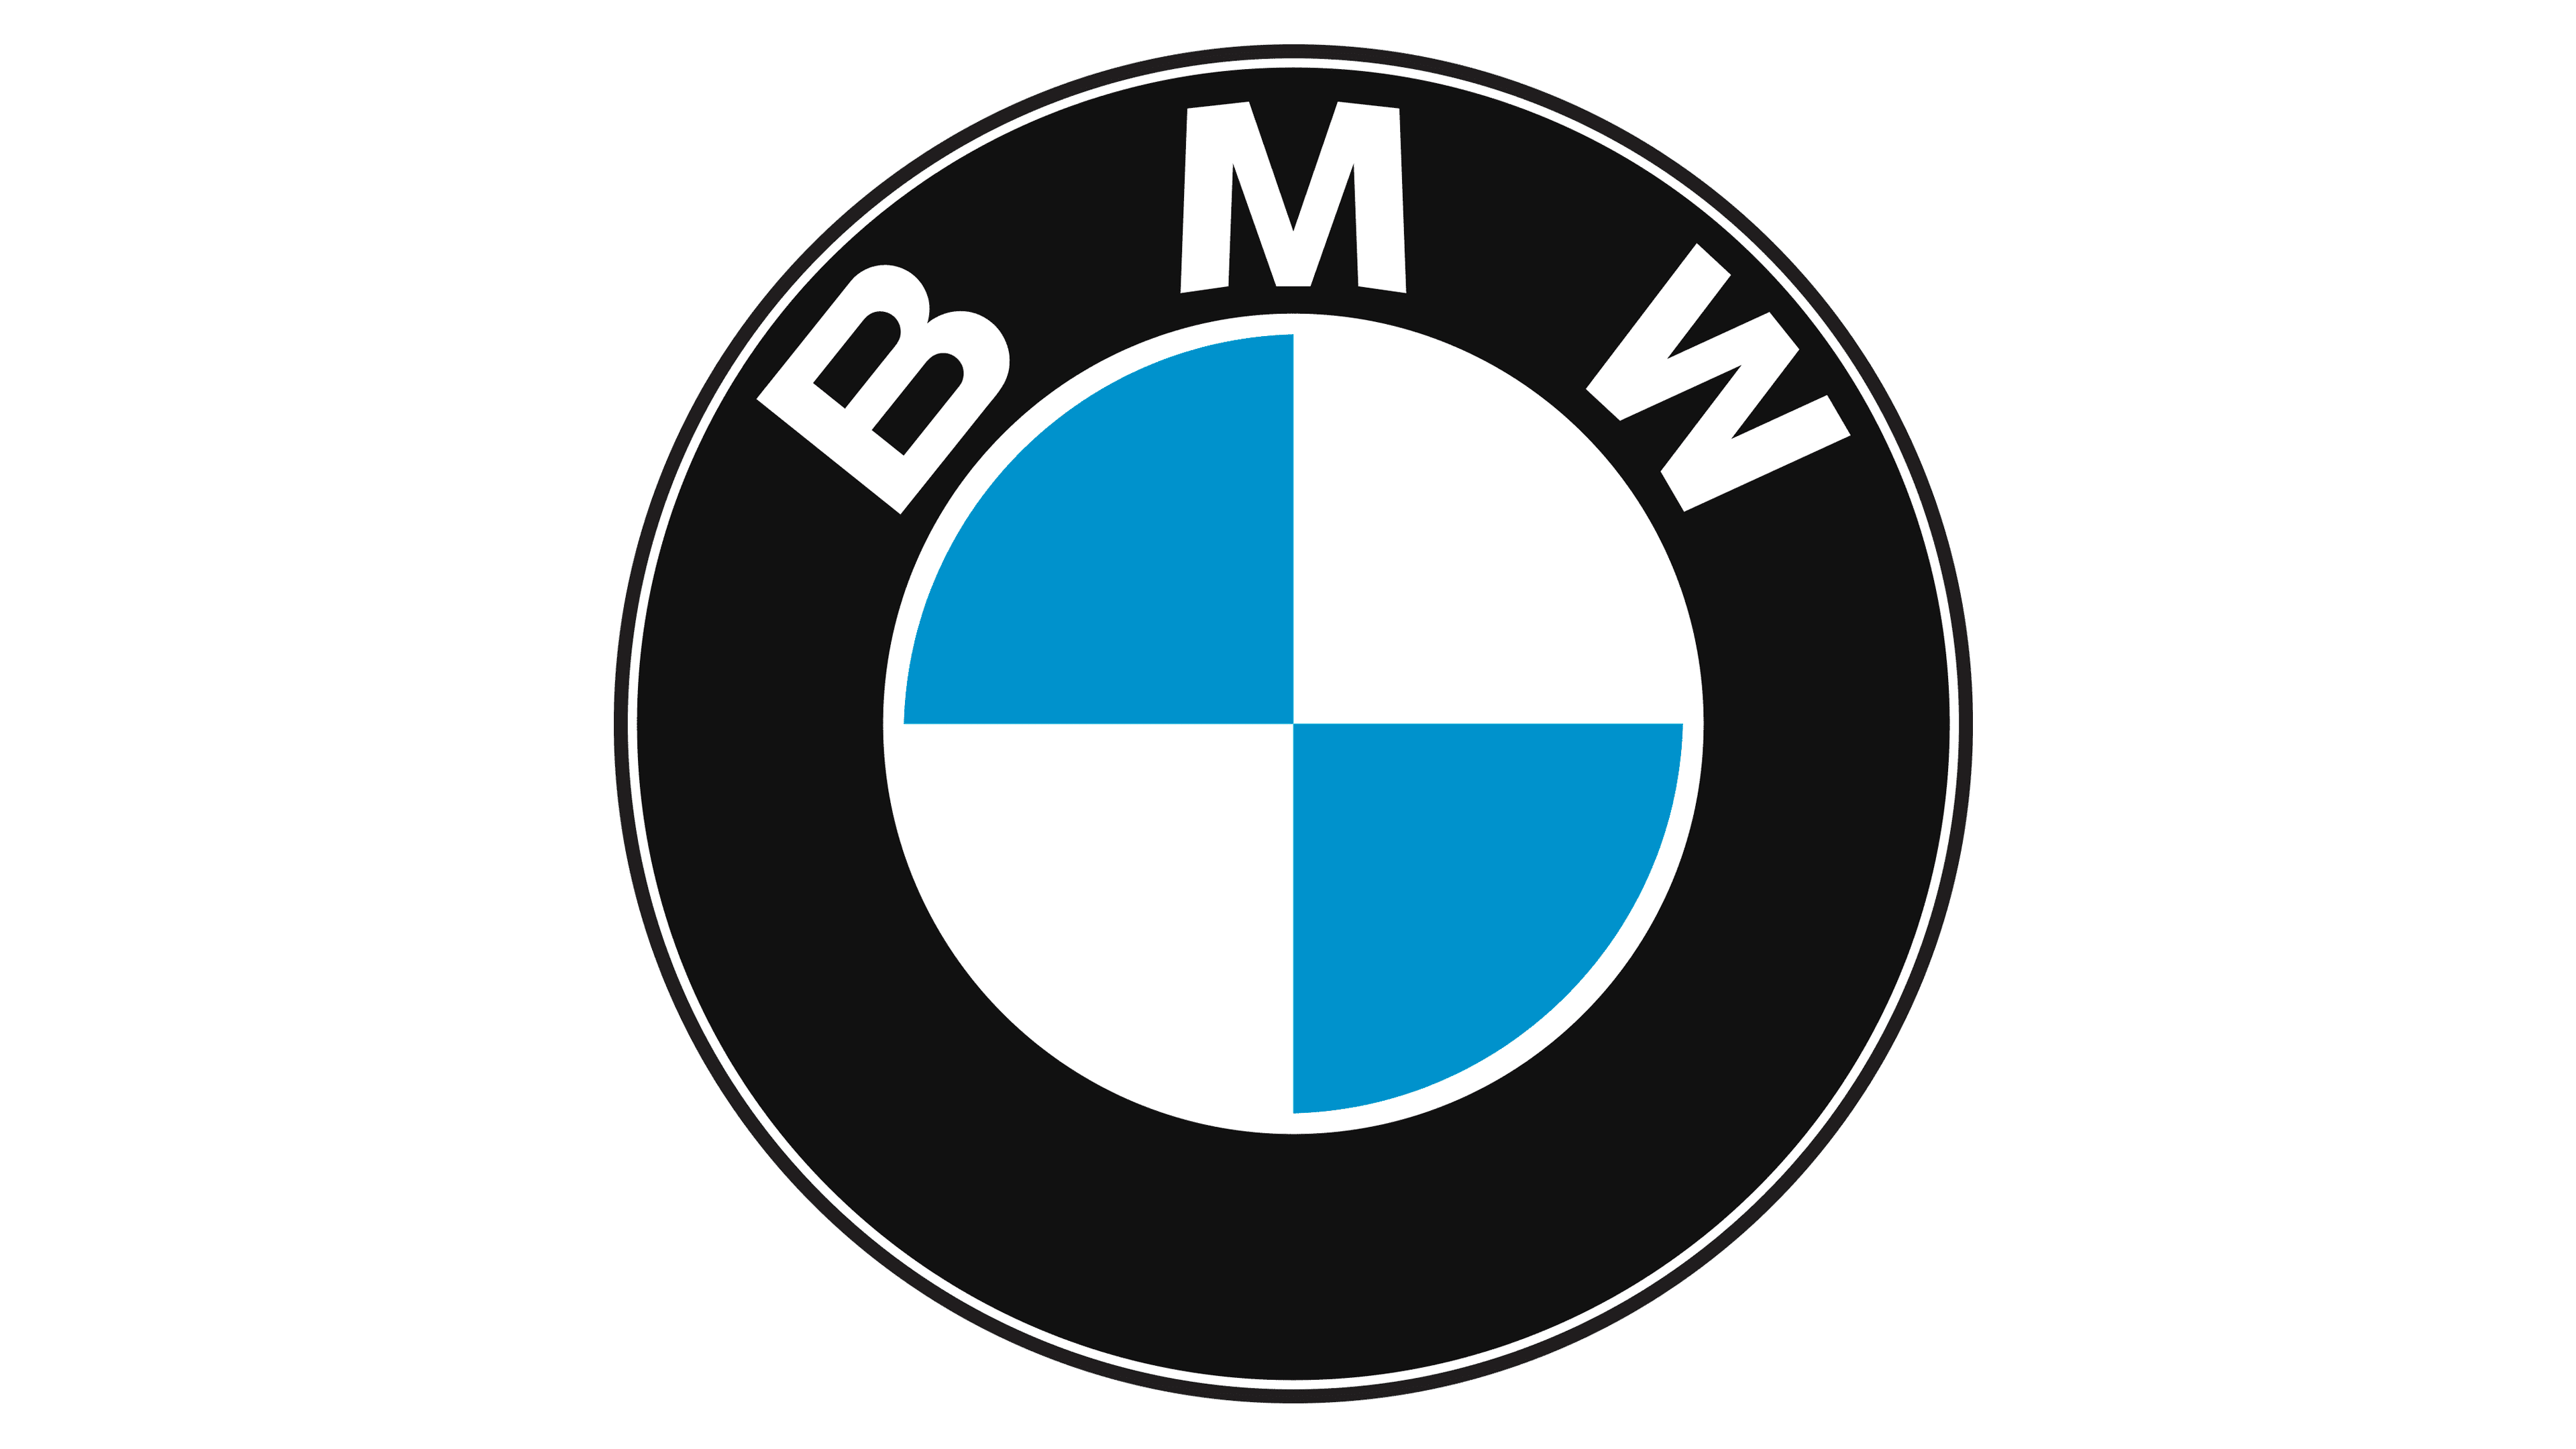 BMW Font